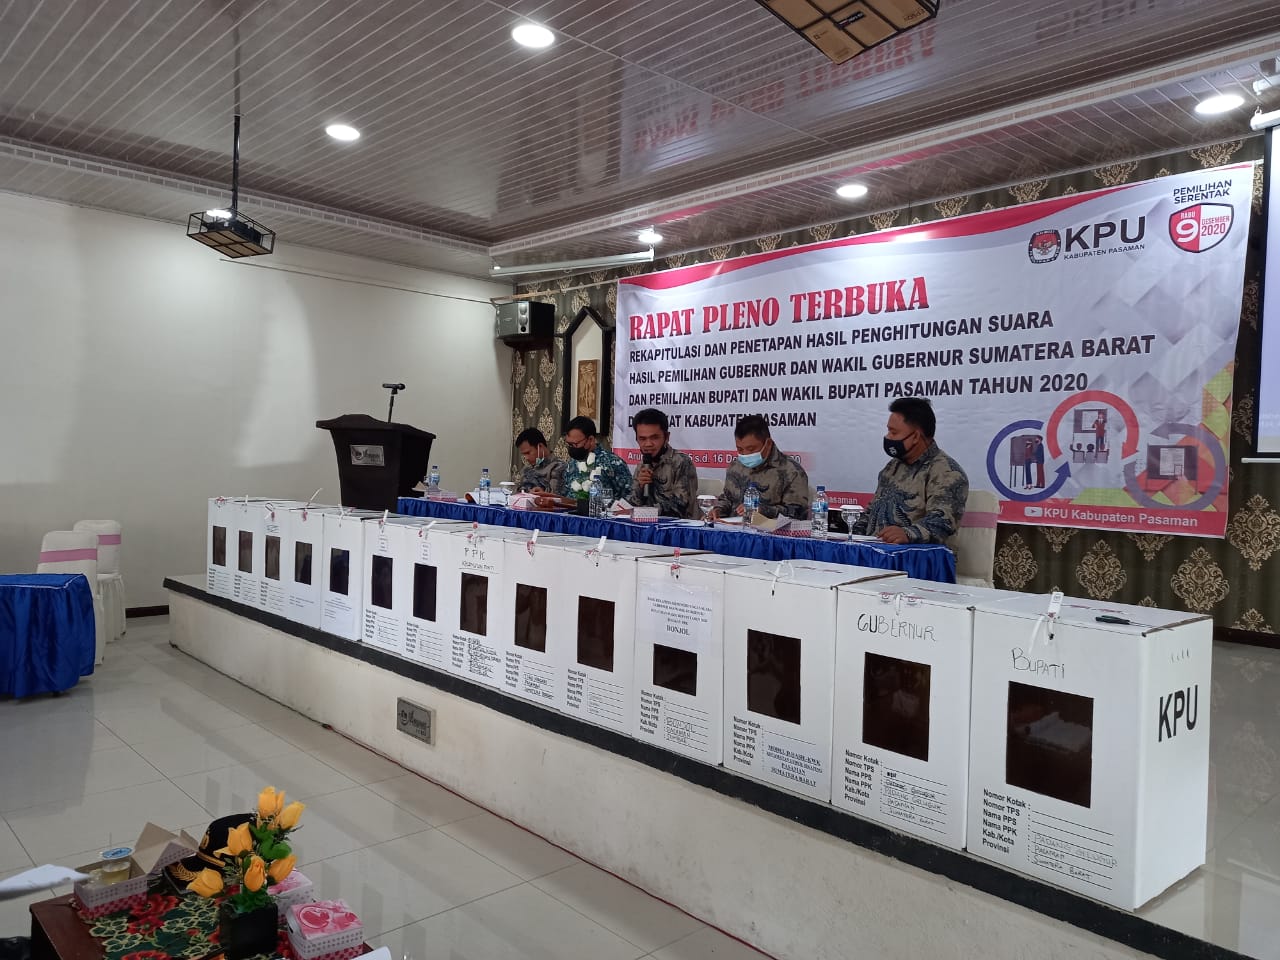 Foto: Rapat Pleno Terbuka Rekapitulasi Tingkat Kabupaten oleh KPU Pasaman